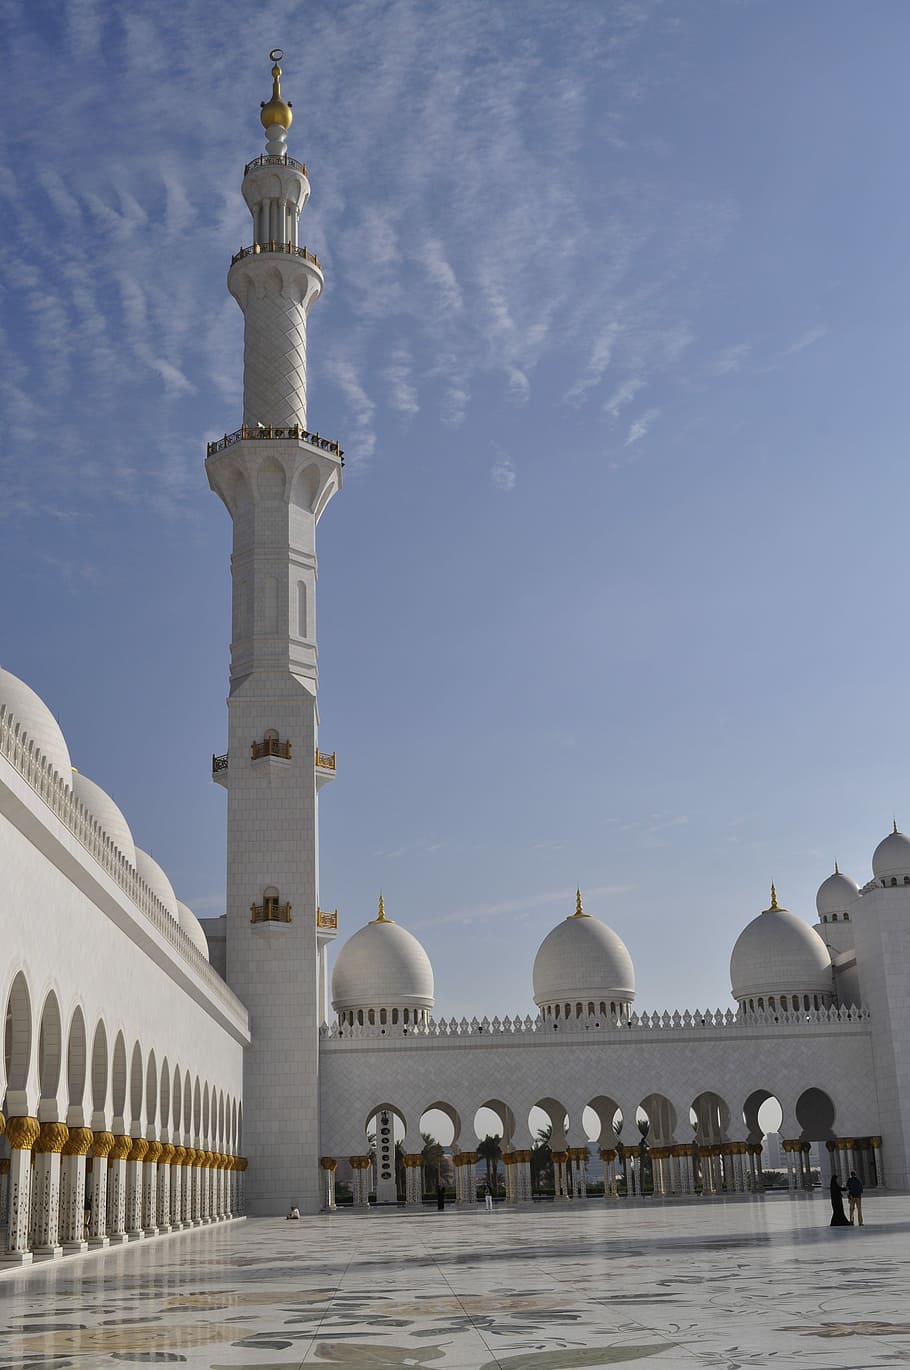 Abu Dhabi, Gran Mezquita, Sol, arquitectura, islam, musulmán, zayed, mezquita, minarete, religión